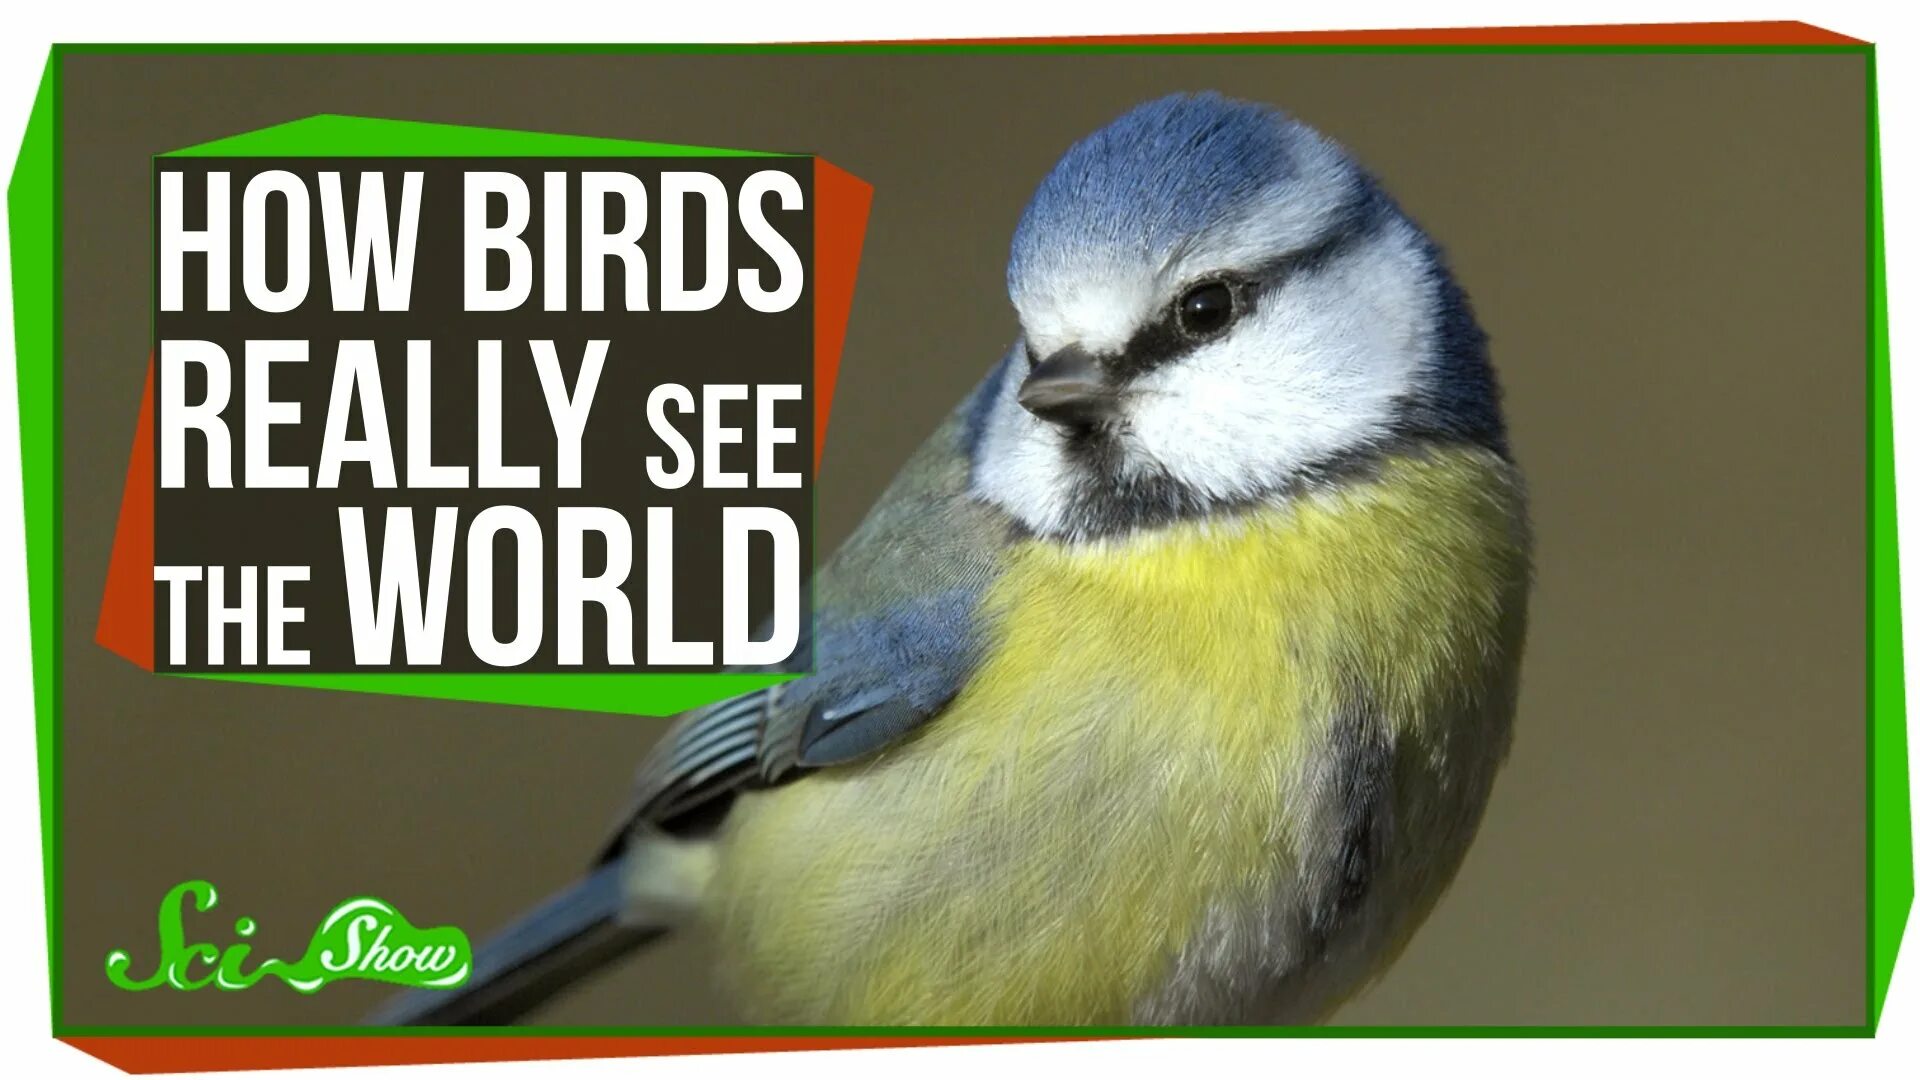 The bird of us. Birds World. How Birds see. Birds are real. How Birds Breathe.